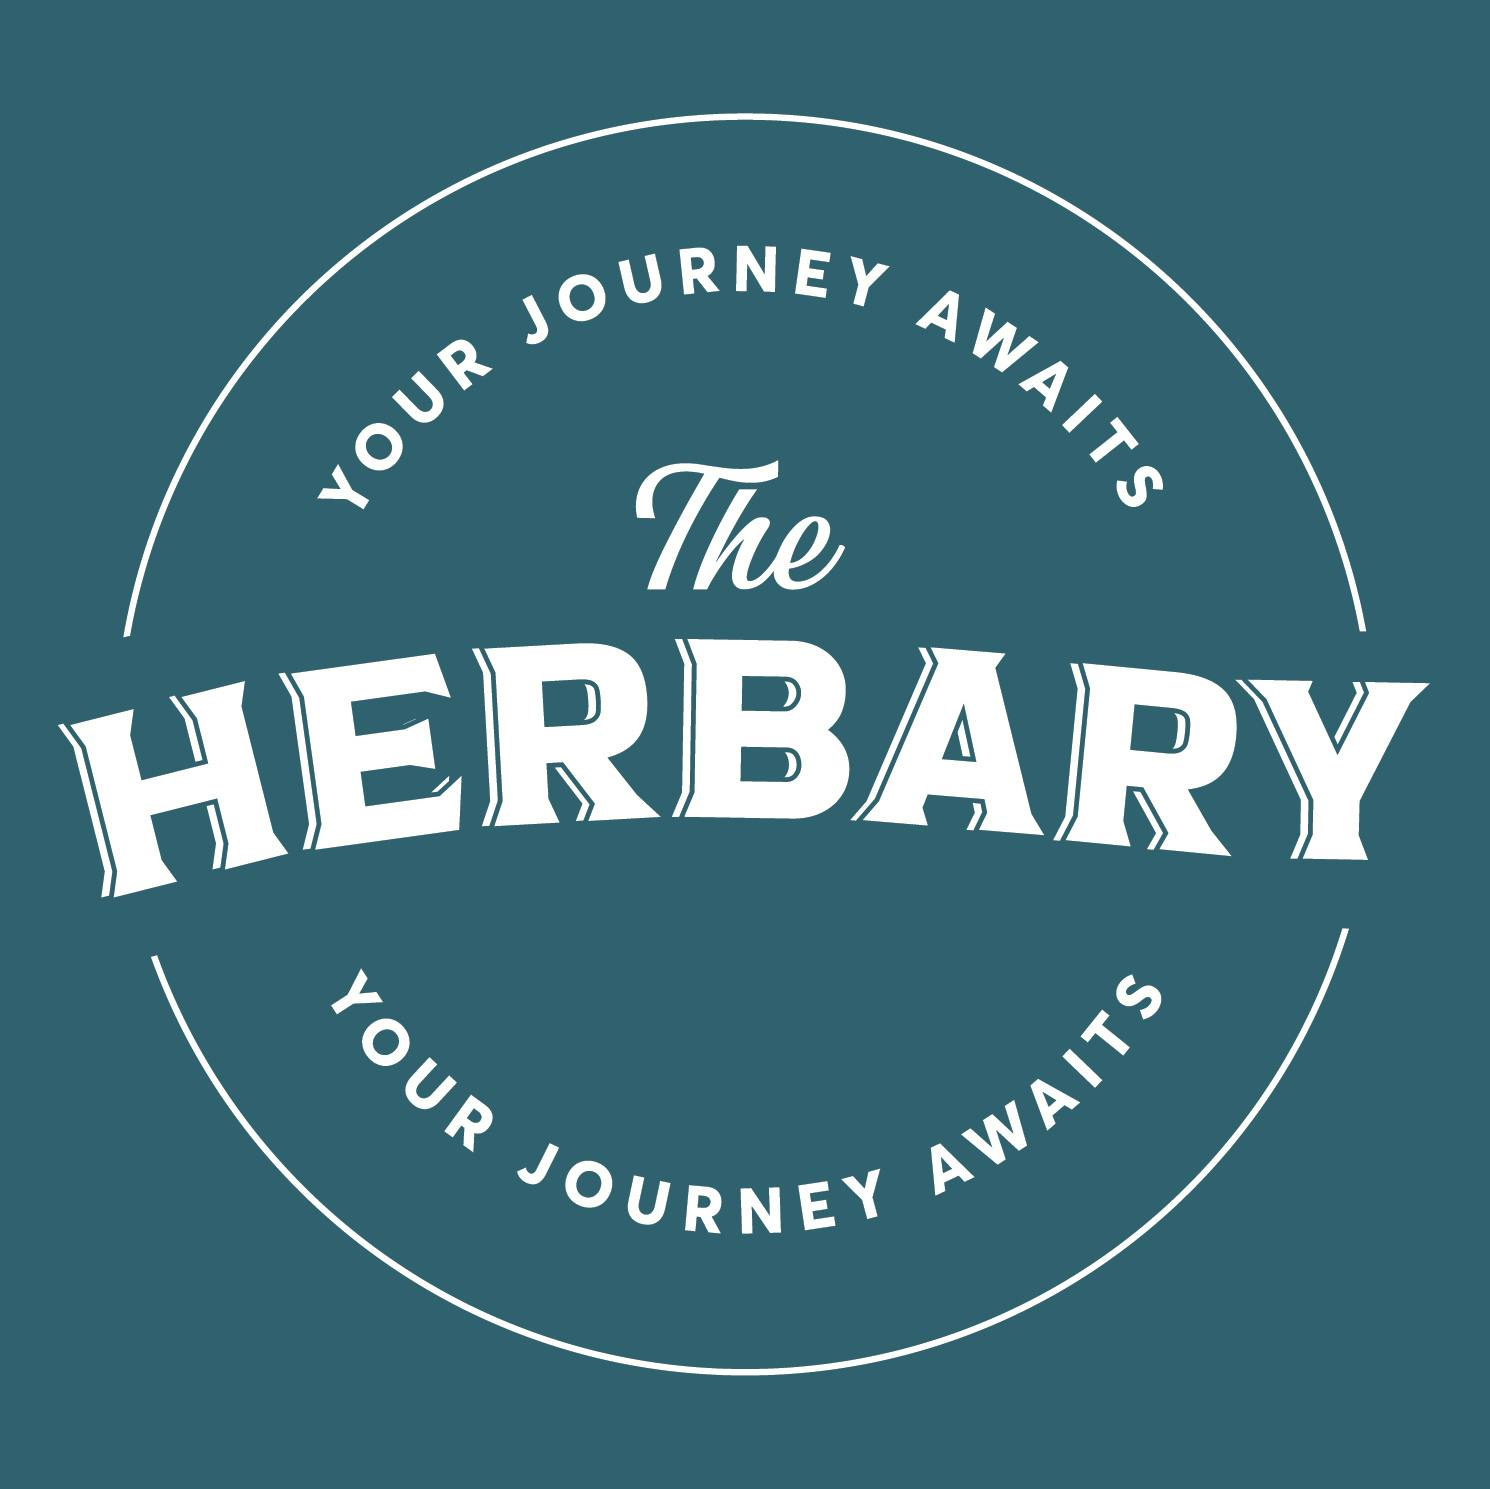 The Herbary